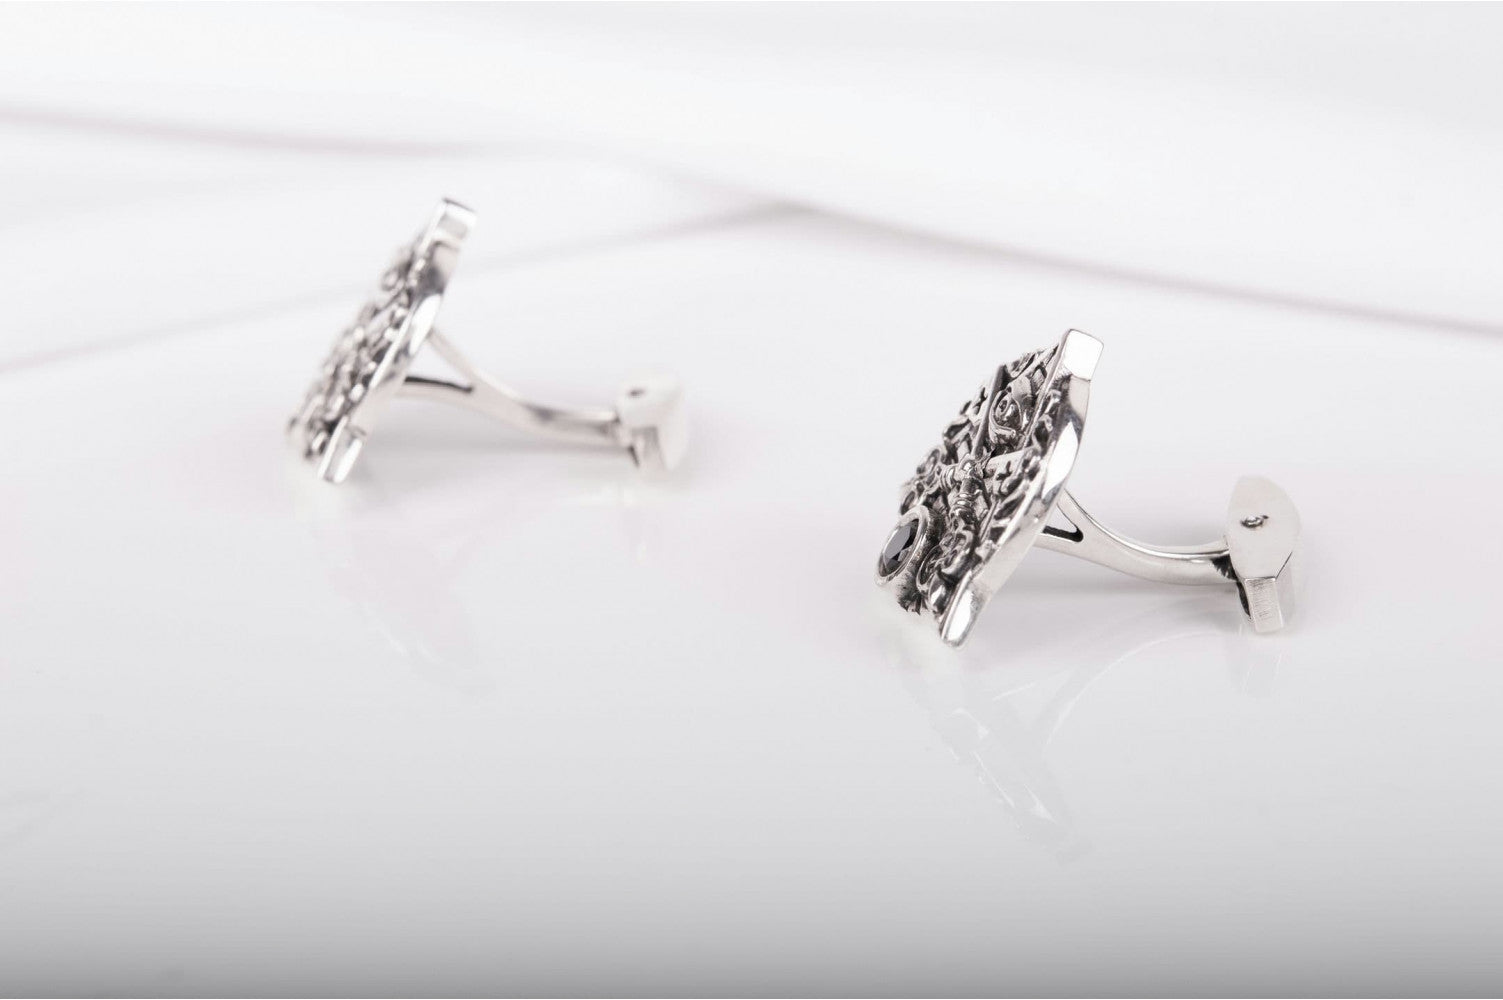 Unique 925 Silver Masonic Cufflinks with All seing Eye and brick ornament, handmade jewelry - vikingworkshop